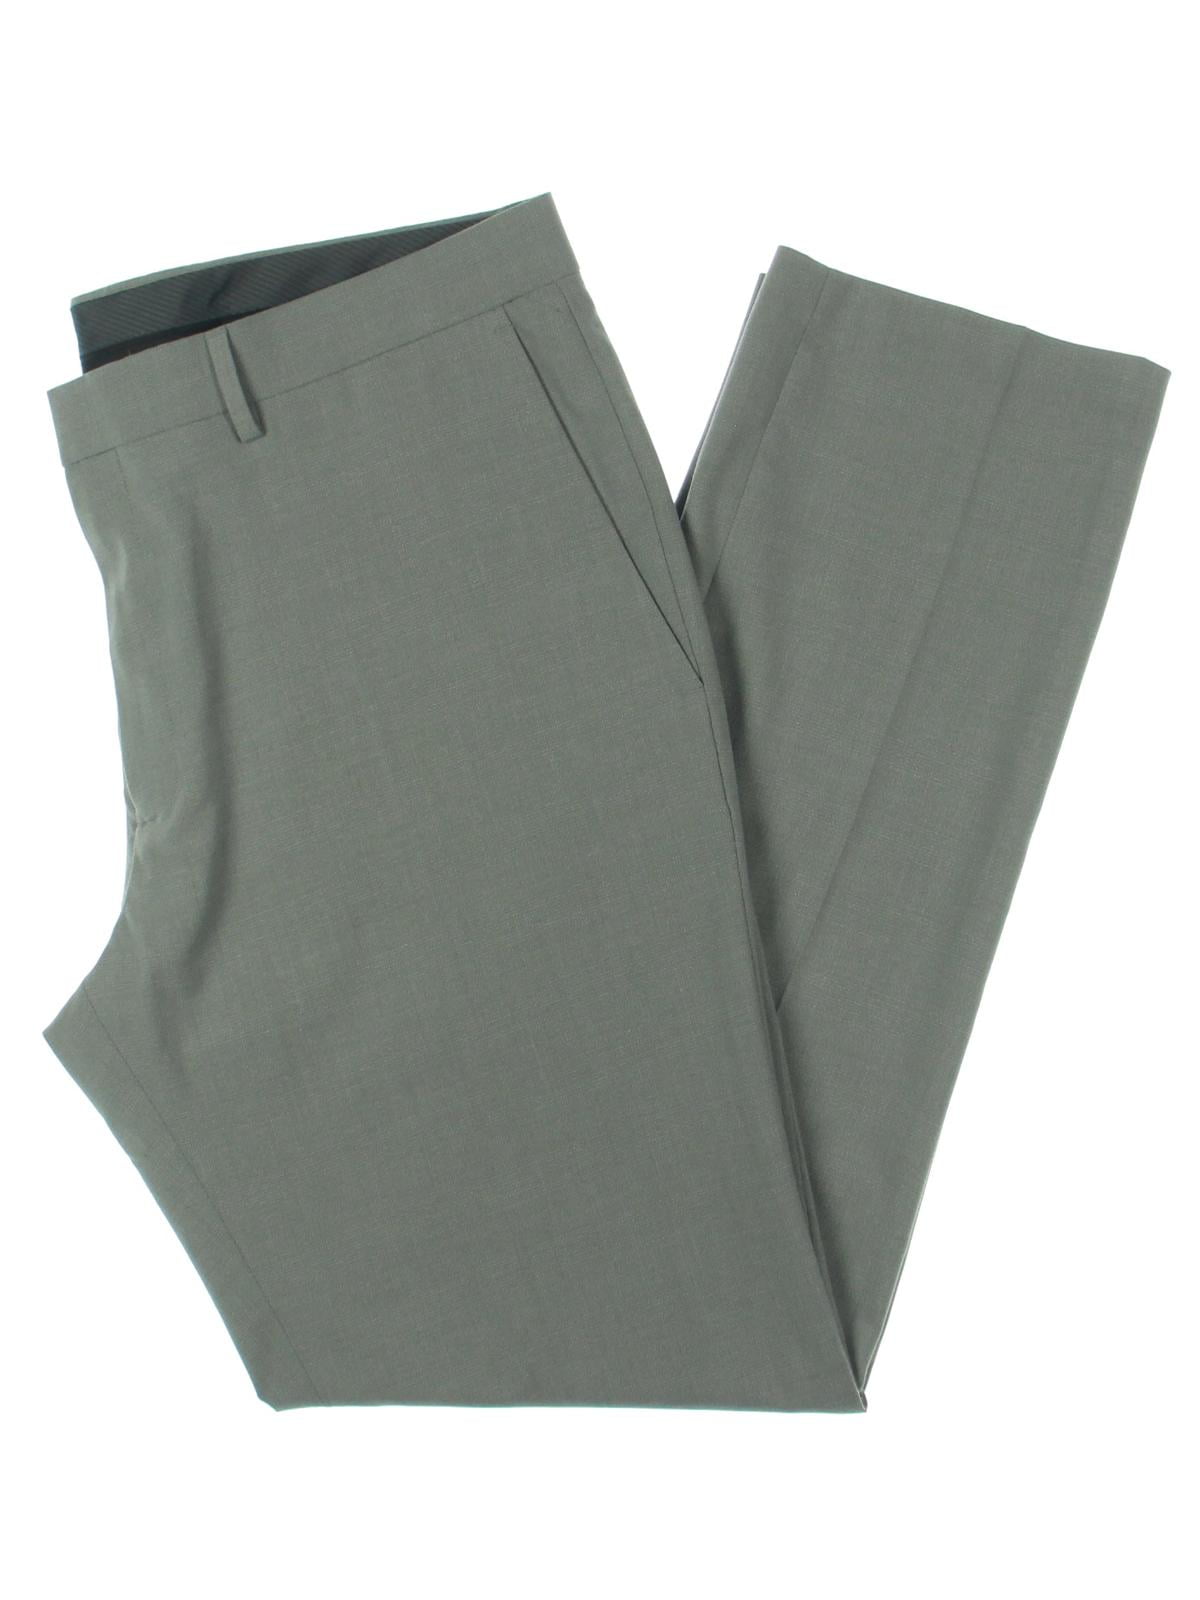 Kenneth Cole Mens Stretch Slim Fit Dress Pants Gray 34/30 - Walmart.com